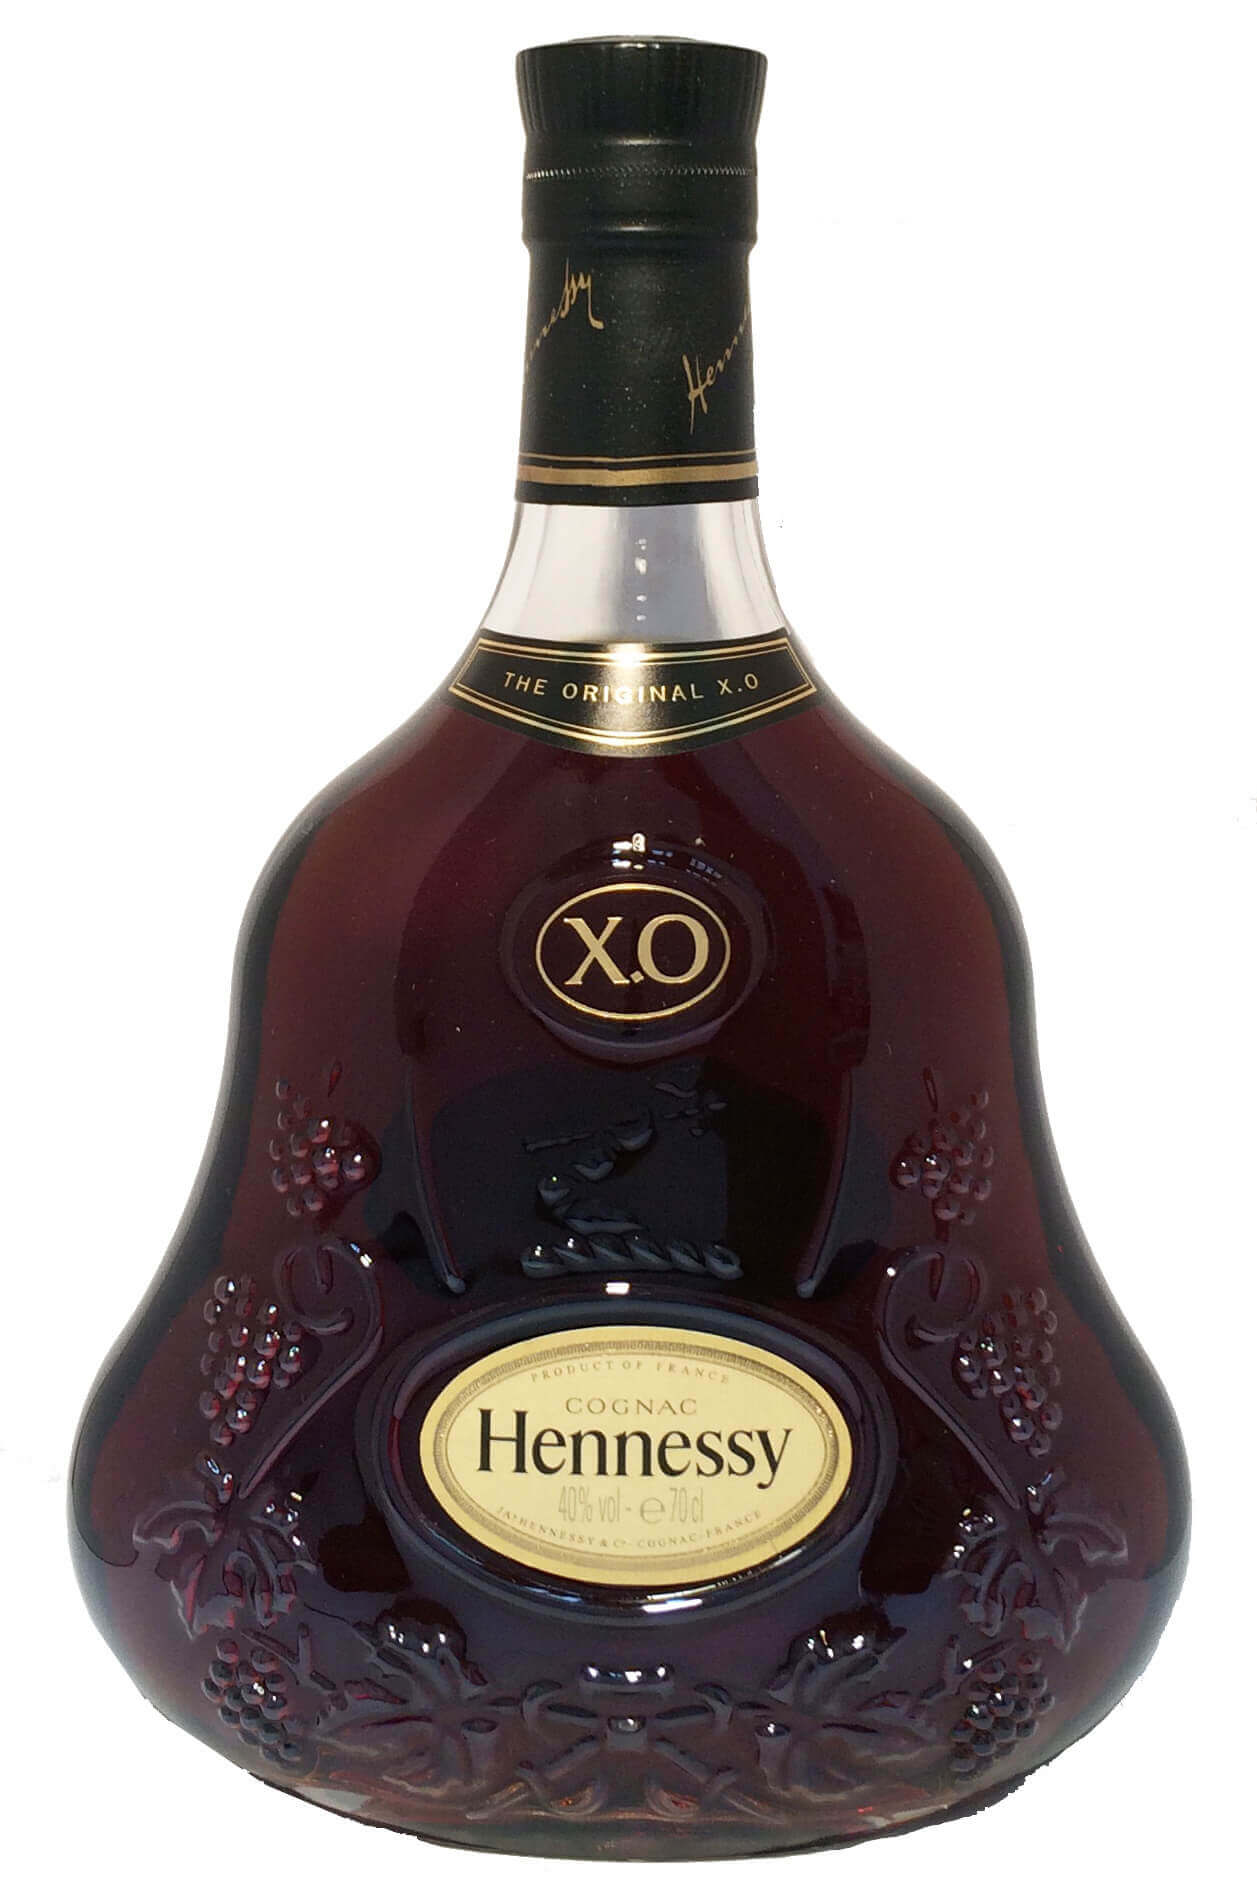 Hennessy cognac цена. Коньяк Хеннесси Хо. 0.7Л коньяк Хеннесси Хо. Hennessy Cognac 0.5 Хо. Хеннесси Хо Extra old Cognac 0.7.